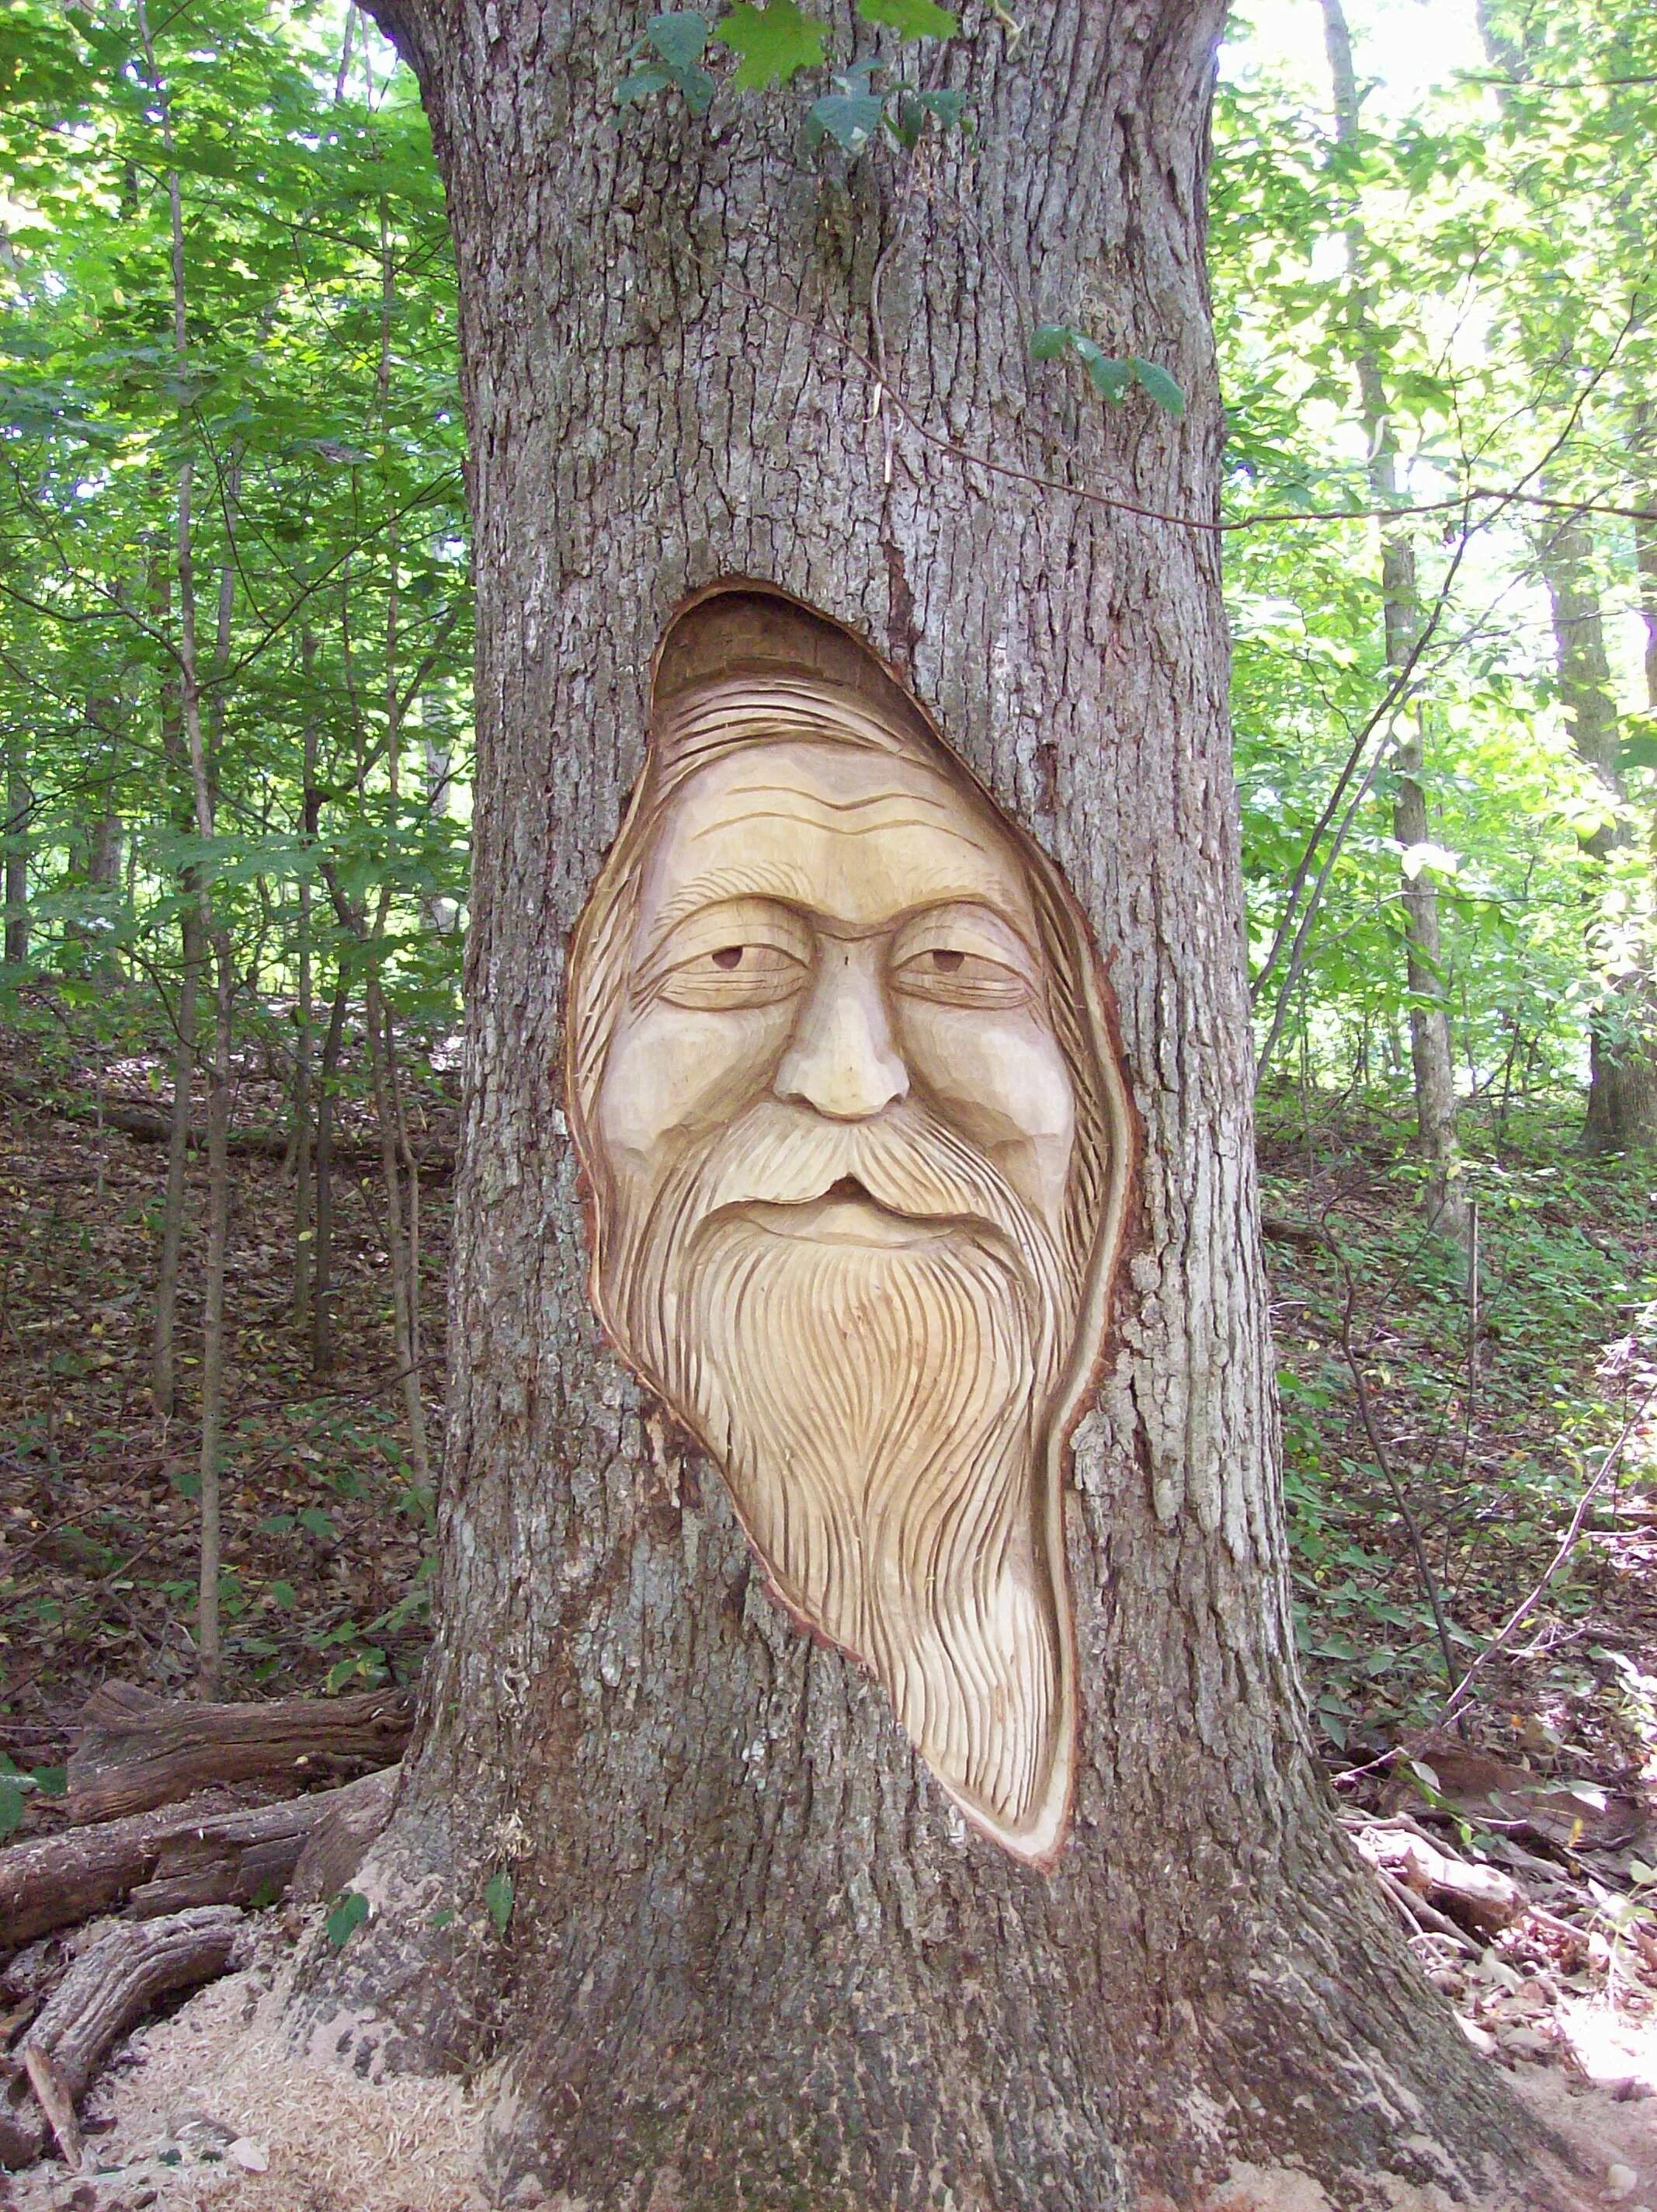 Картинки лицо дерево. Резьба по стволу дерева. Резьба по дереву скульптура Садовая. Лицо из дерева. Дерево с лицом.